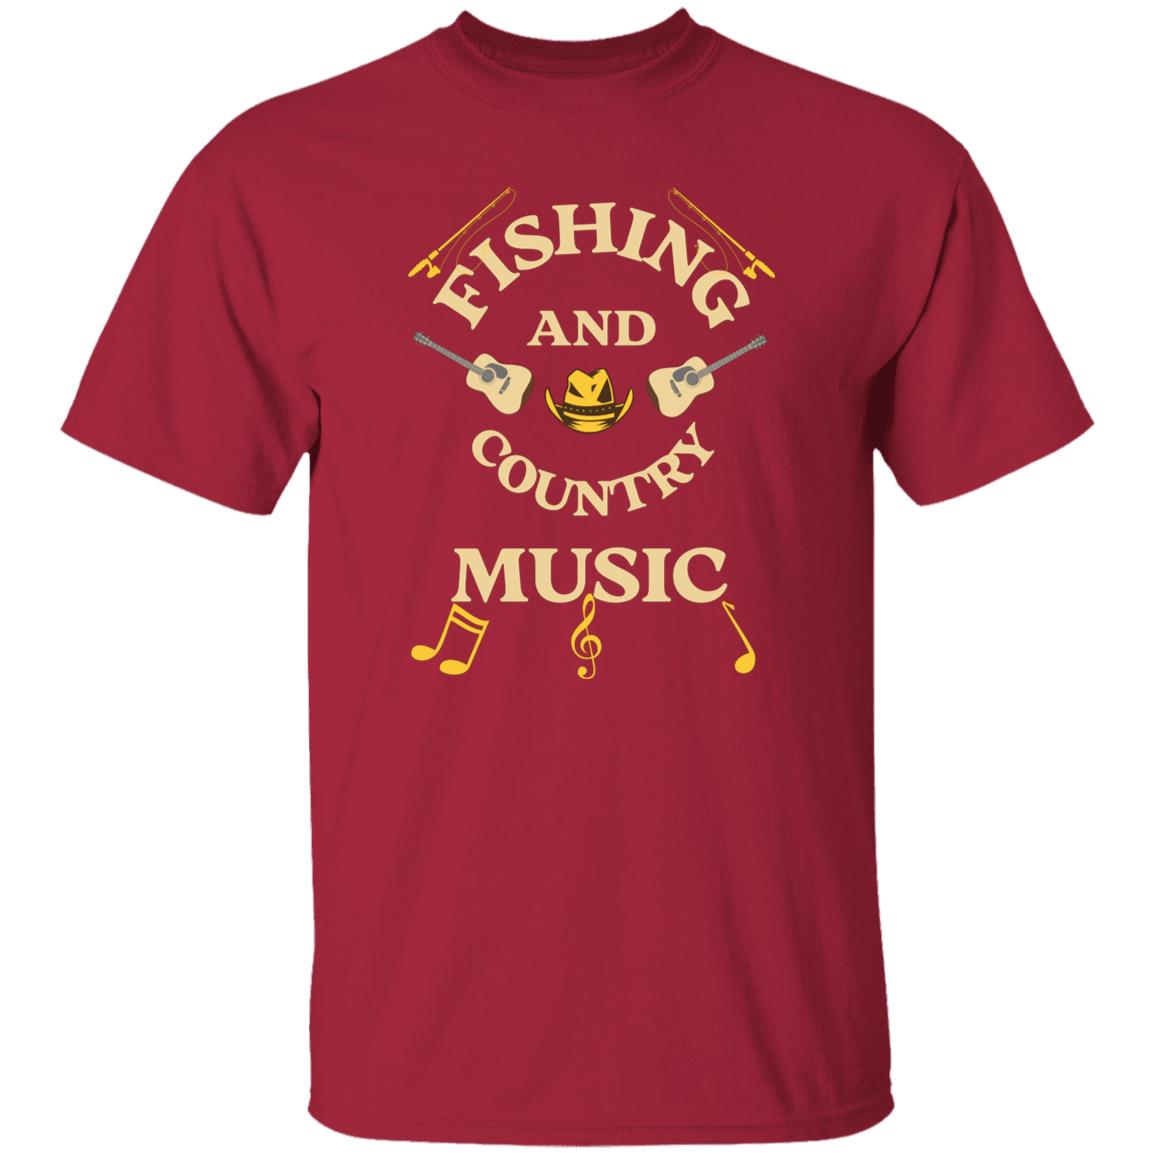 Fishing and country music t-shirt k cardinal